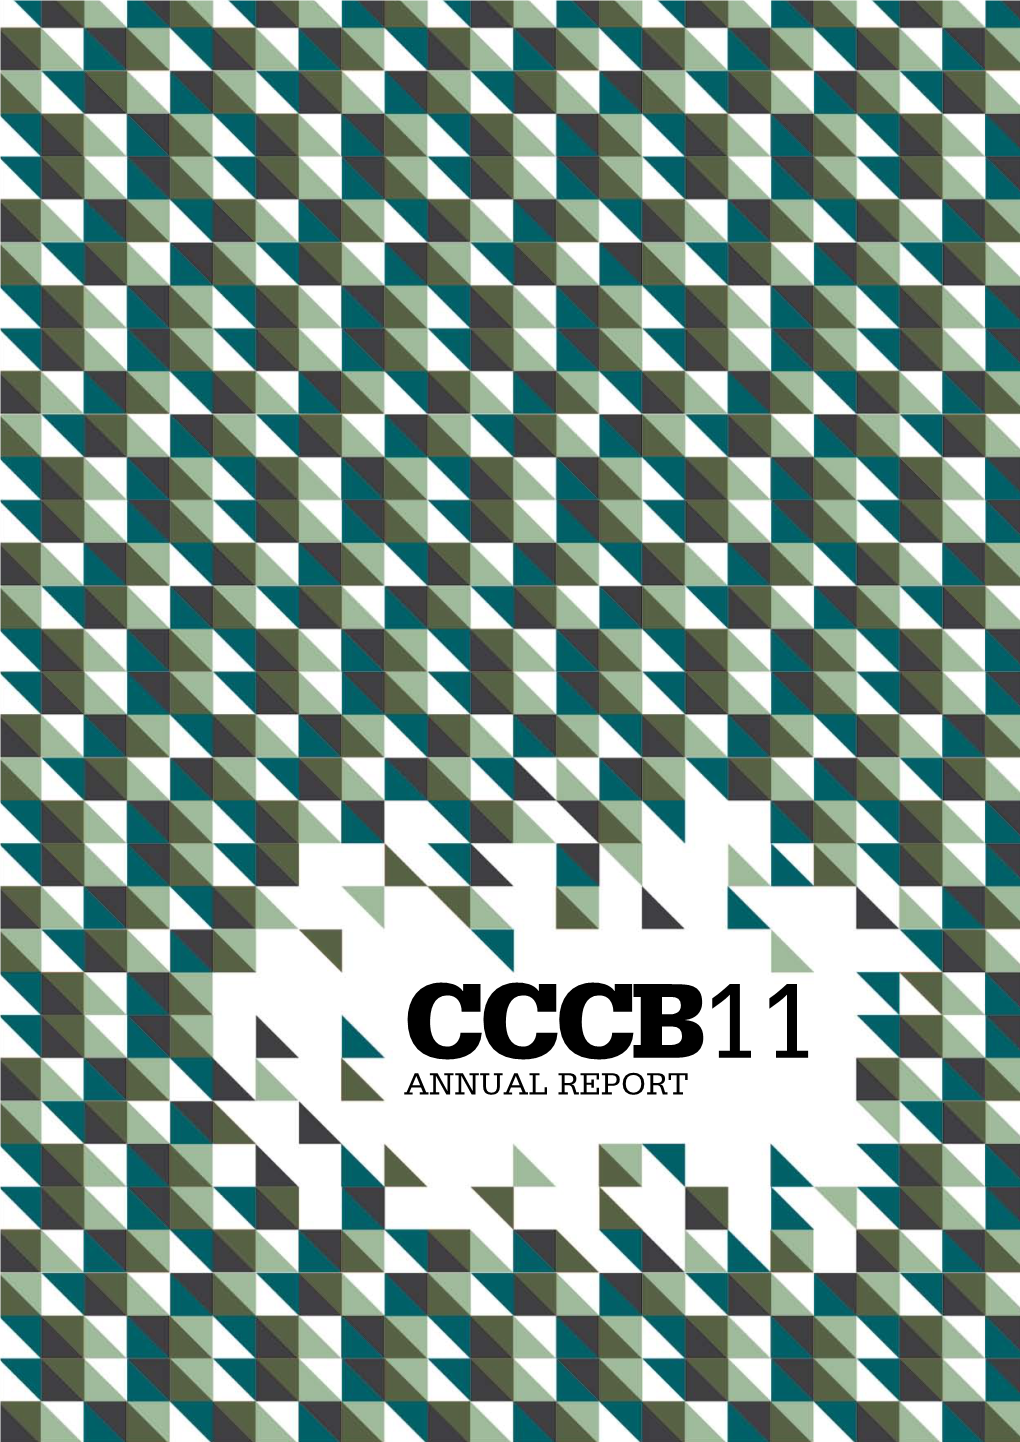 CCCB11 Annual Report